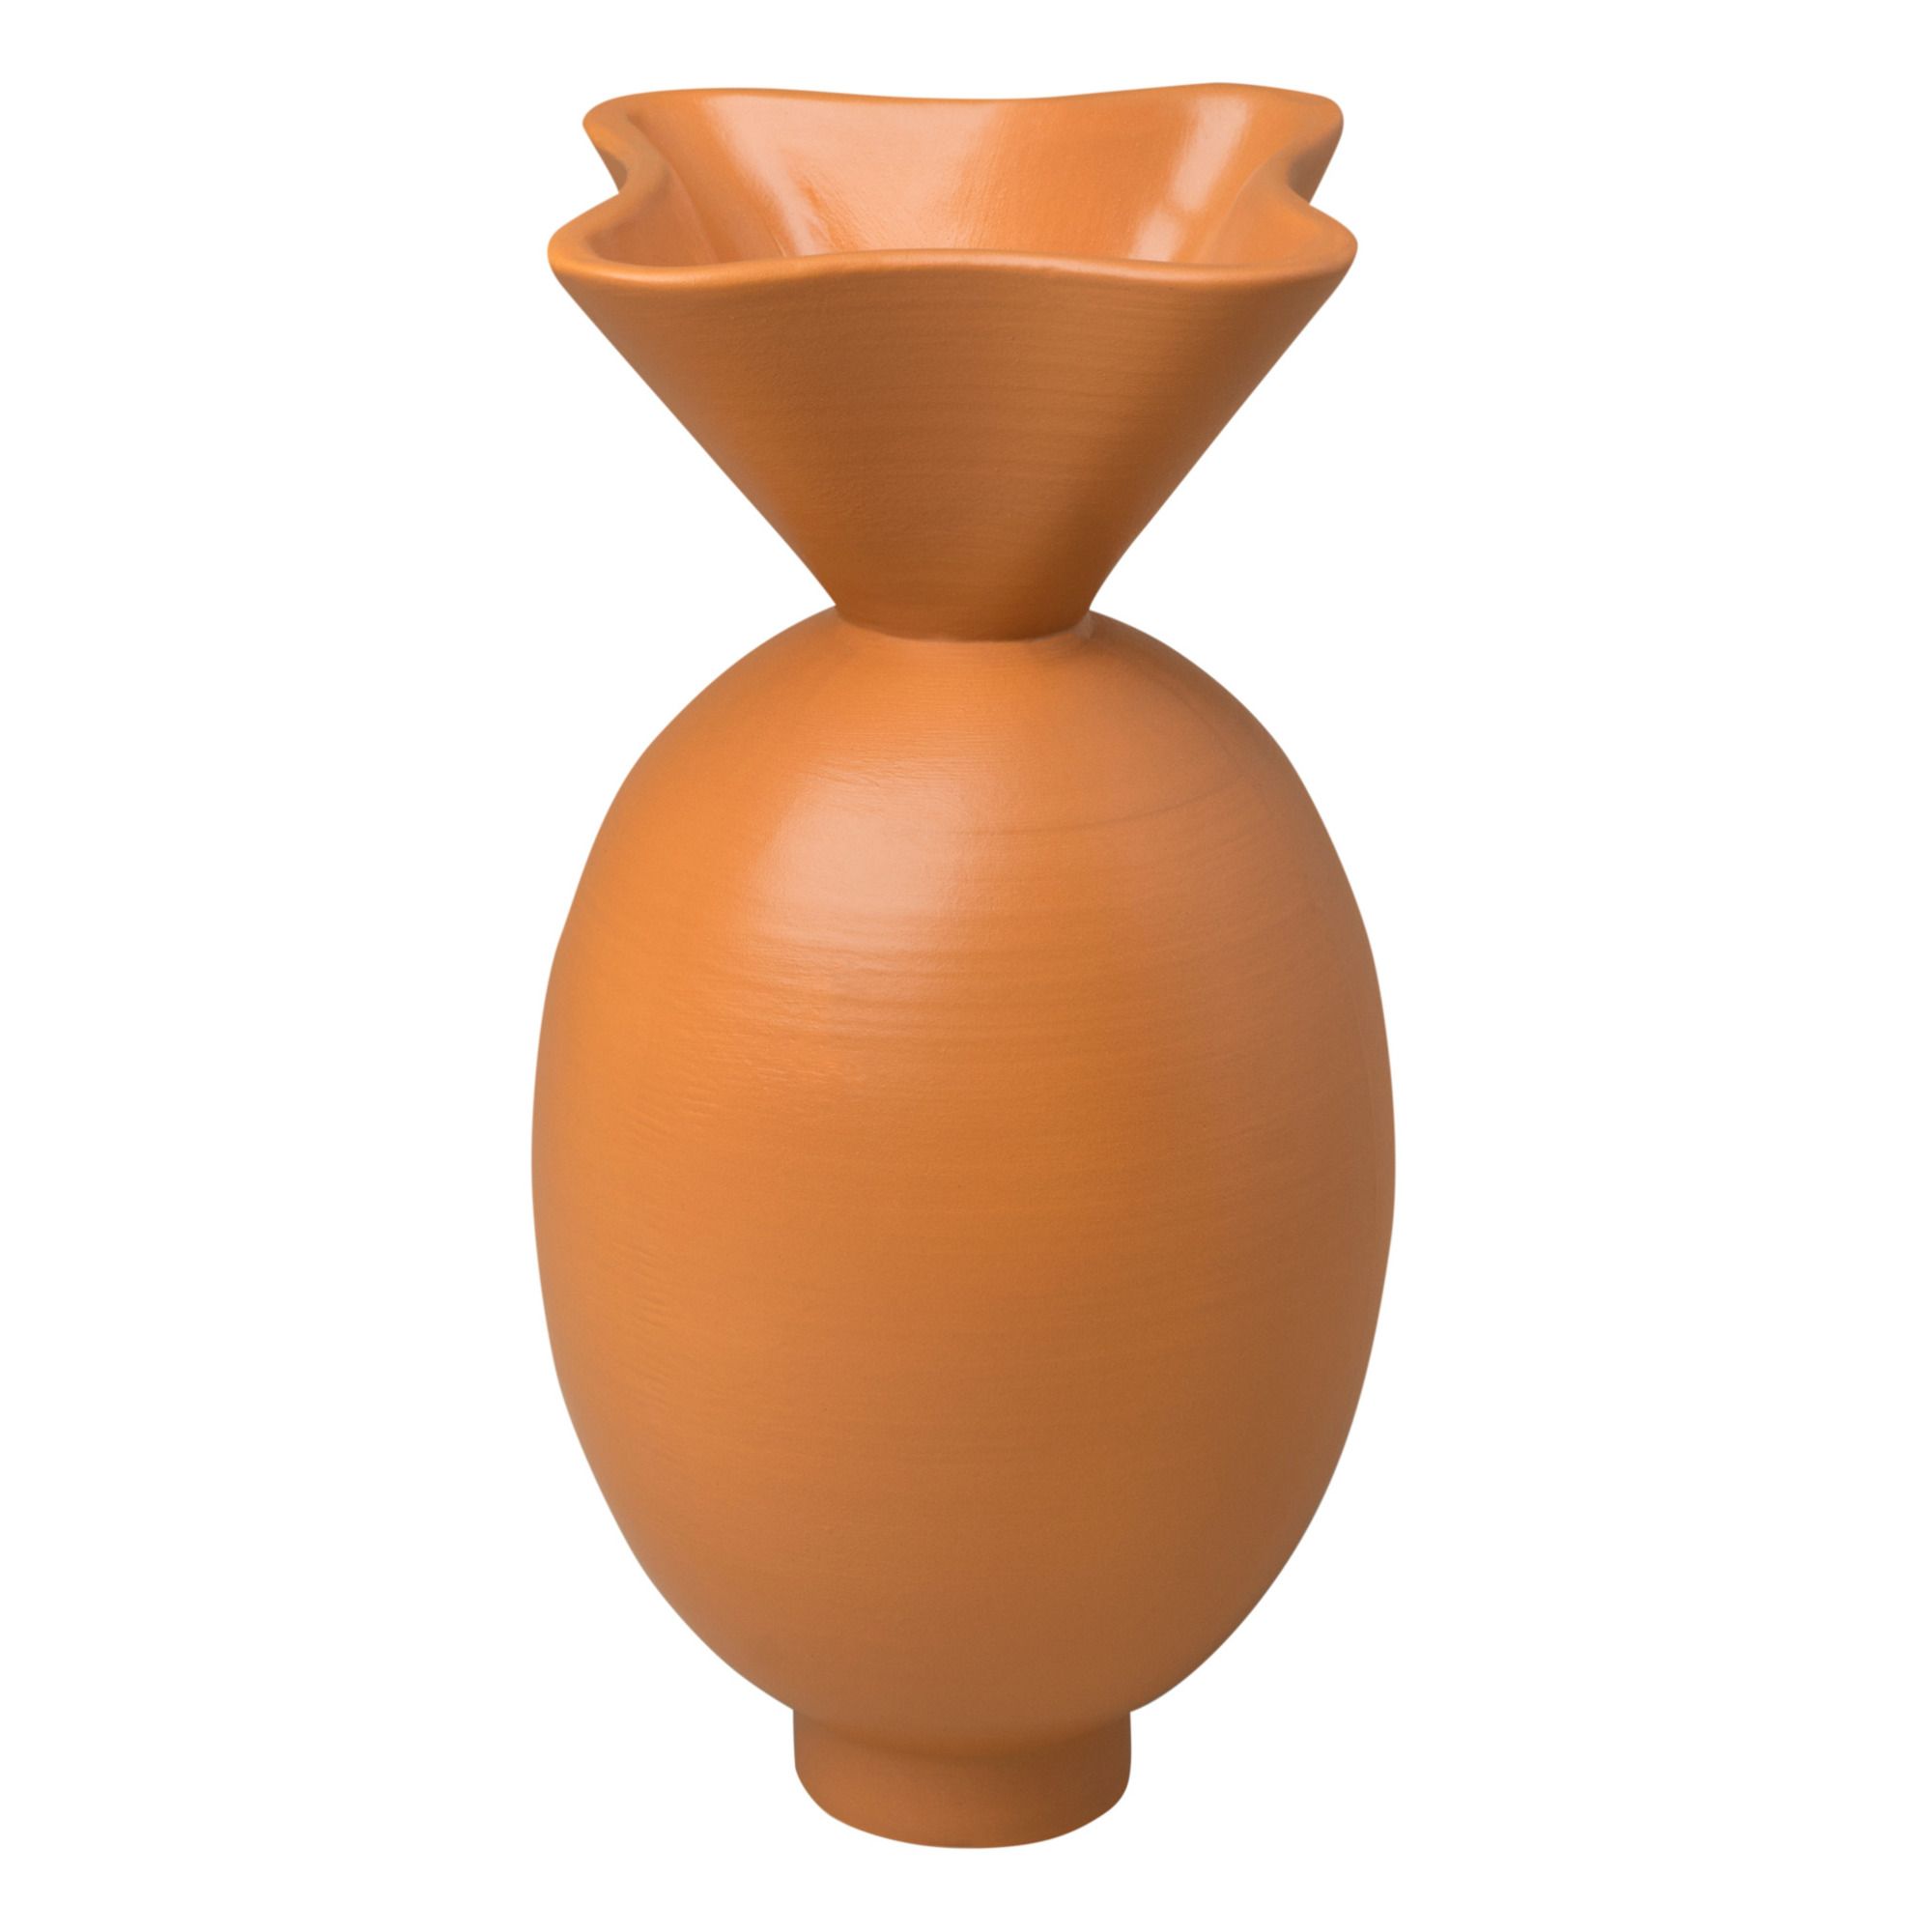 Los Objetos Decorativos - Vase Von en argile émaillé - Terracotta